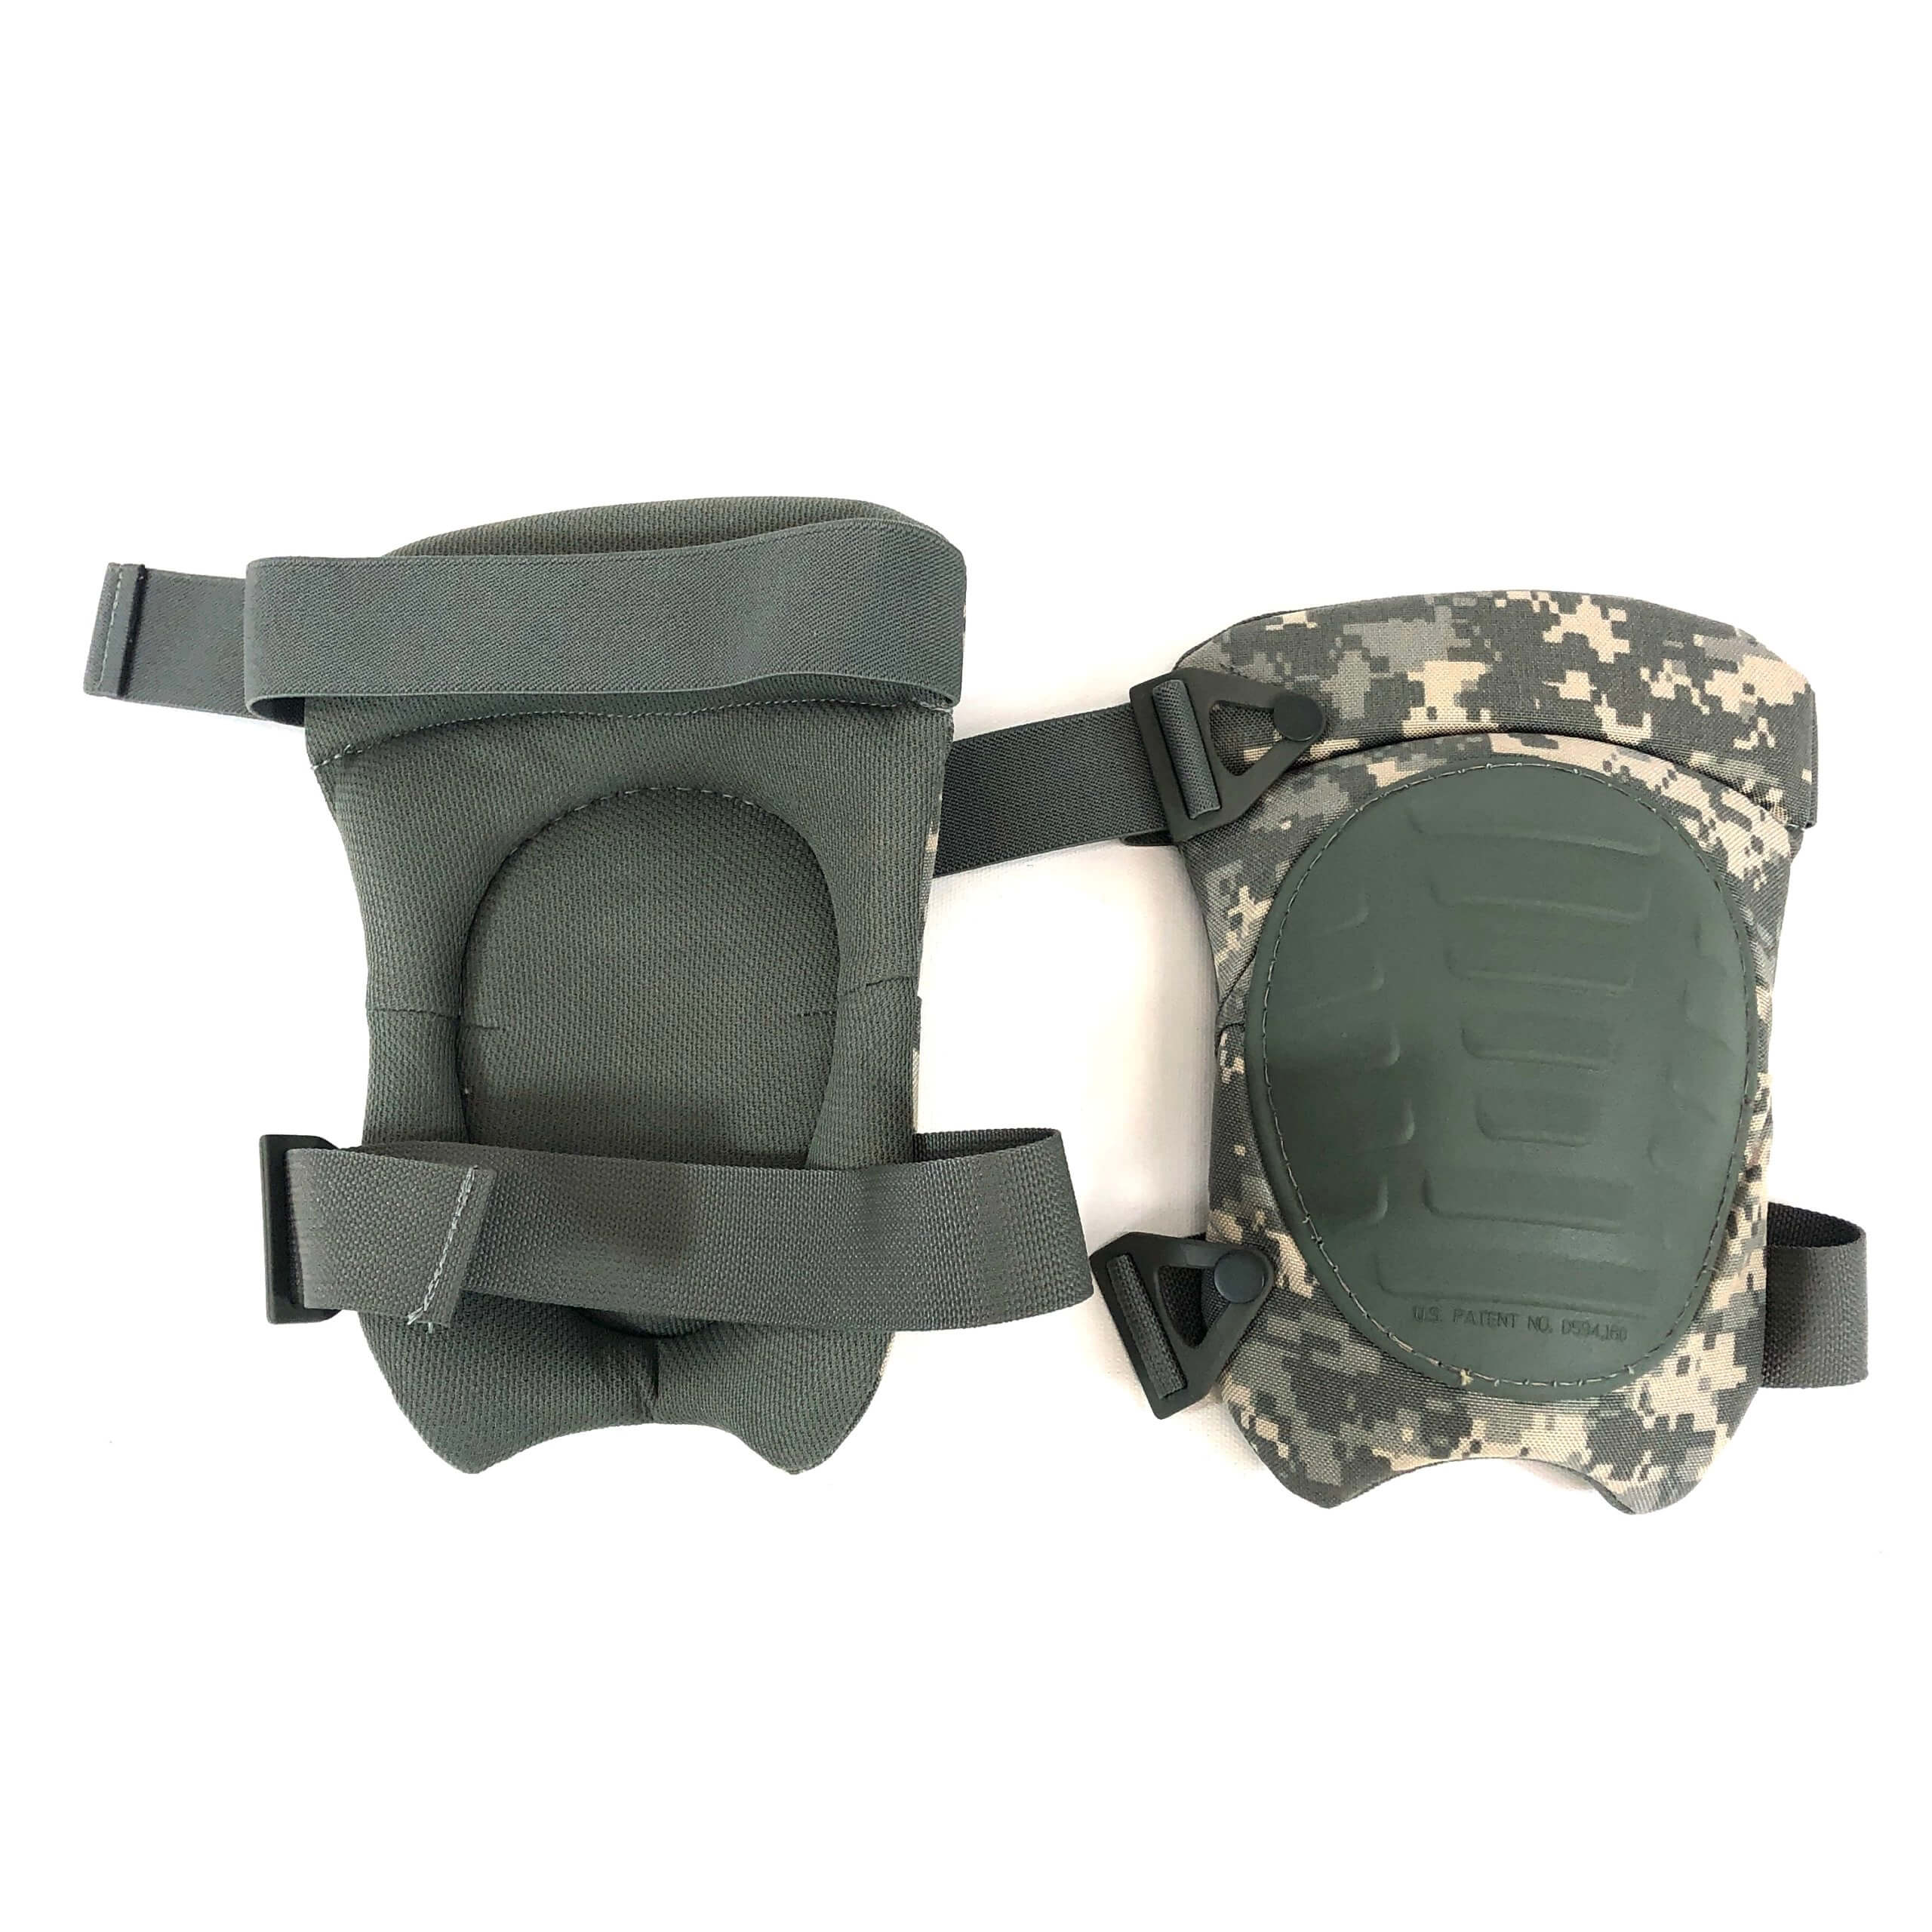 Military McGuire-Nicholas Used Knee & Elbow Pads Issue Digital Camo 